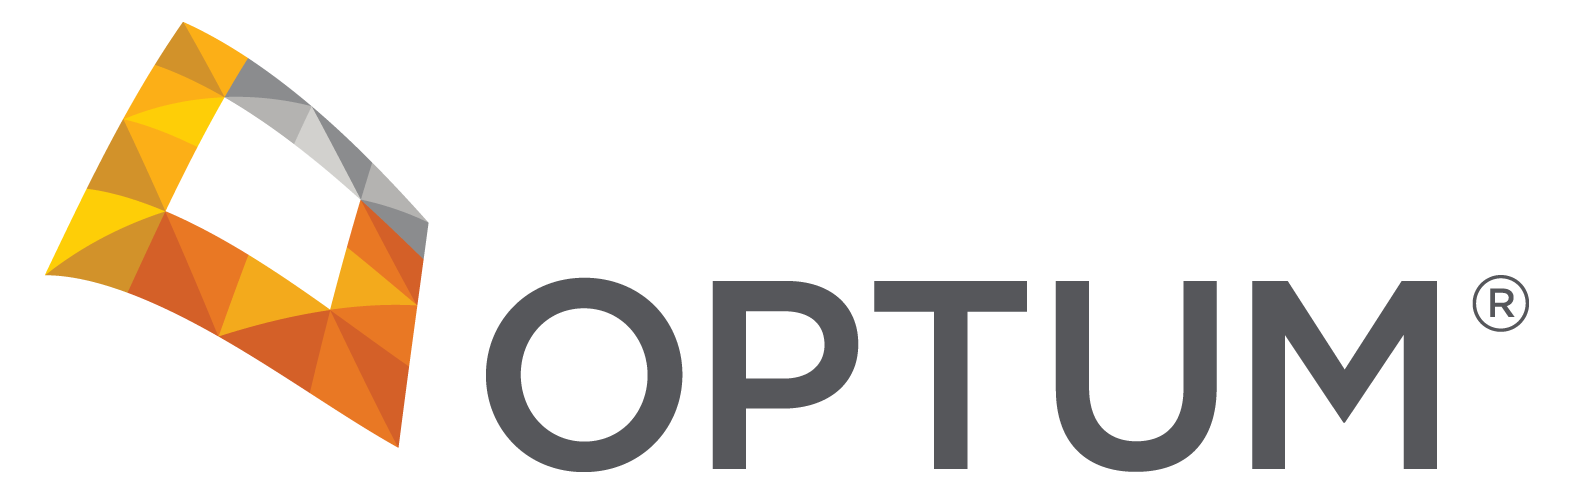 Optum Health Logo - Media Library - UnitedHealth Group